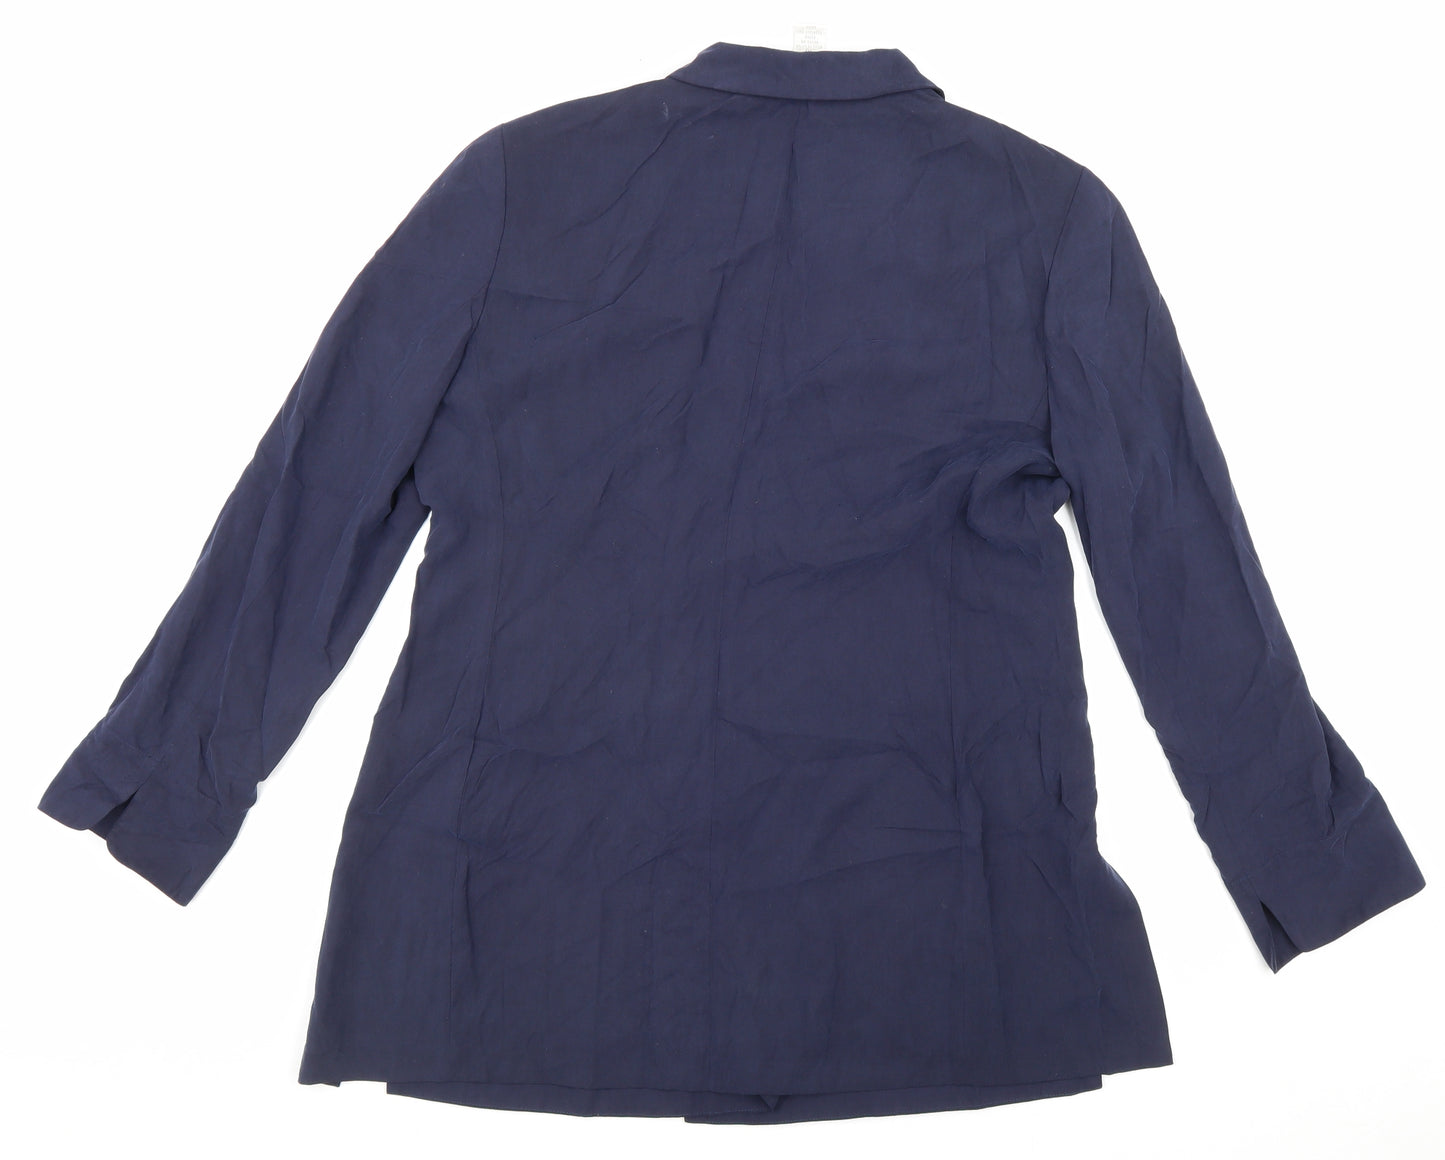 Jones New York Womens Blue Silk Basic Blouse Size 10 Collared